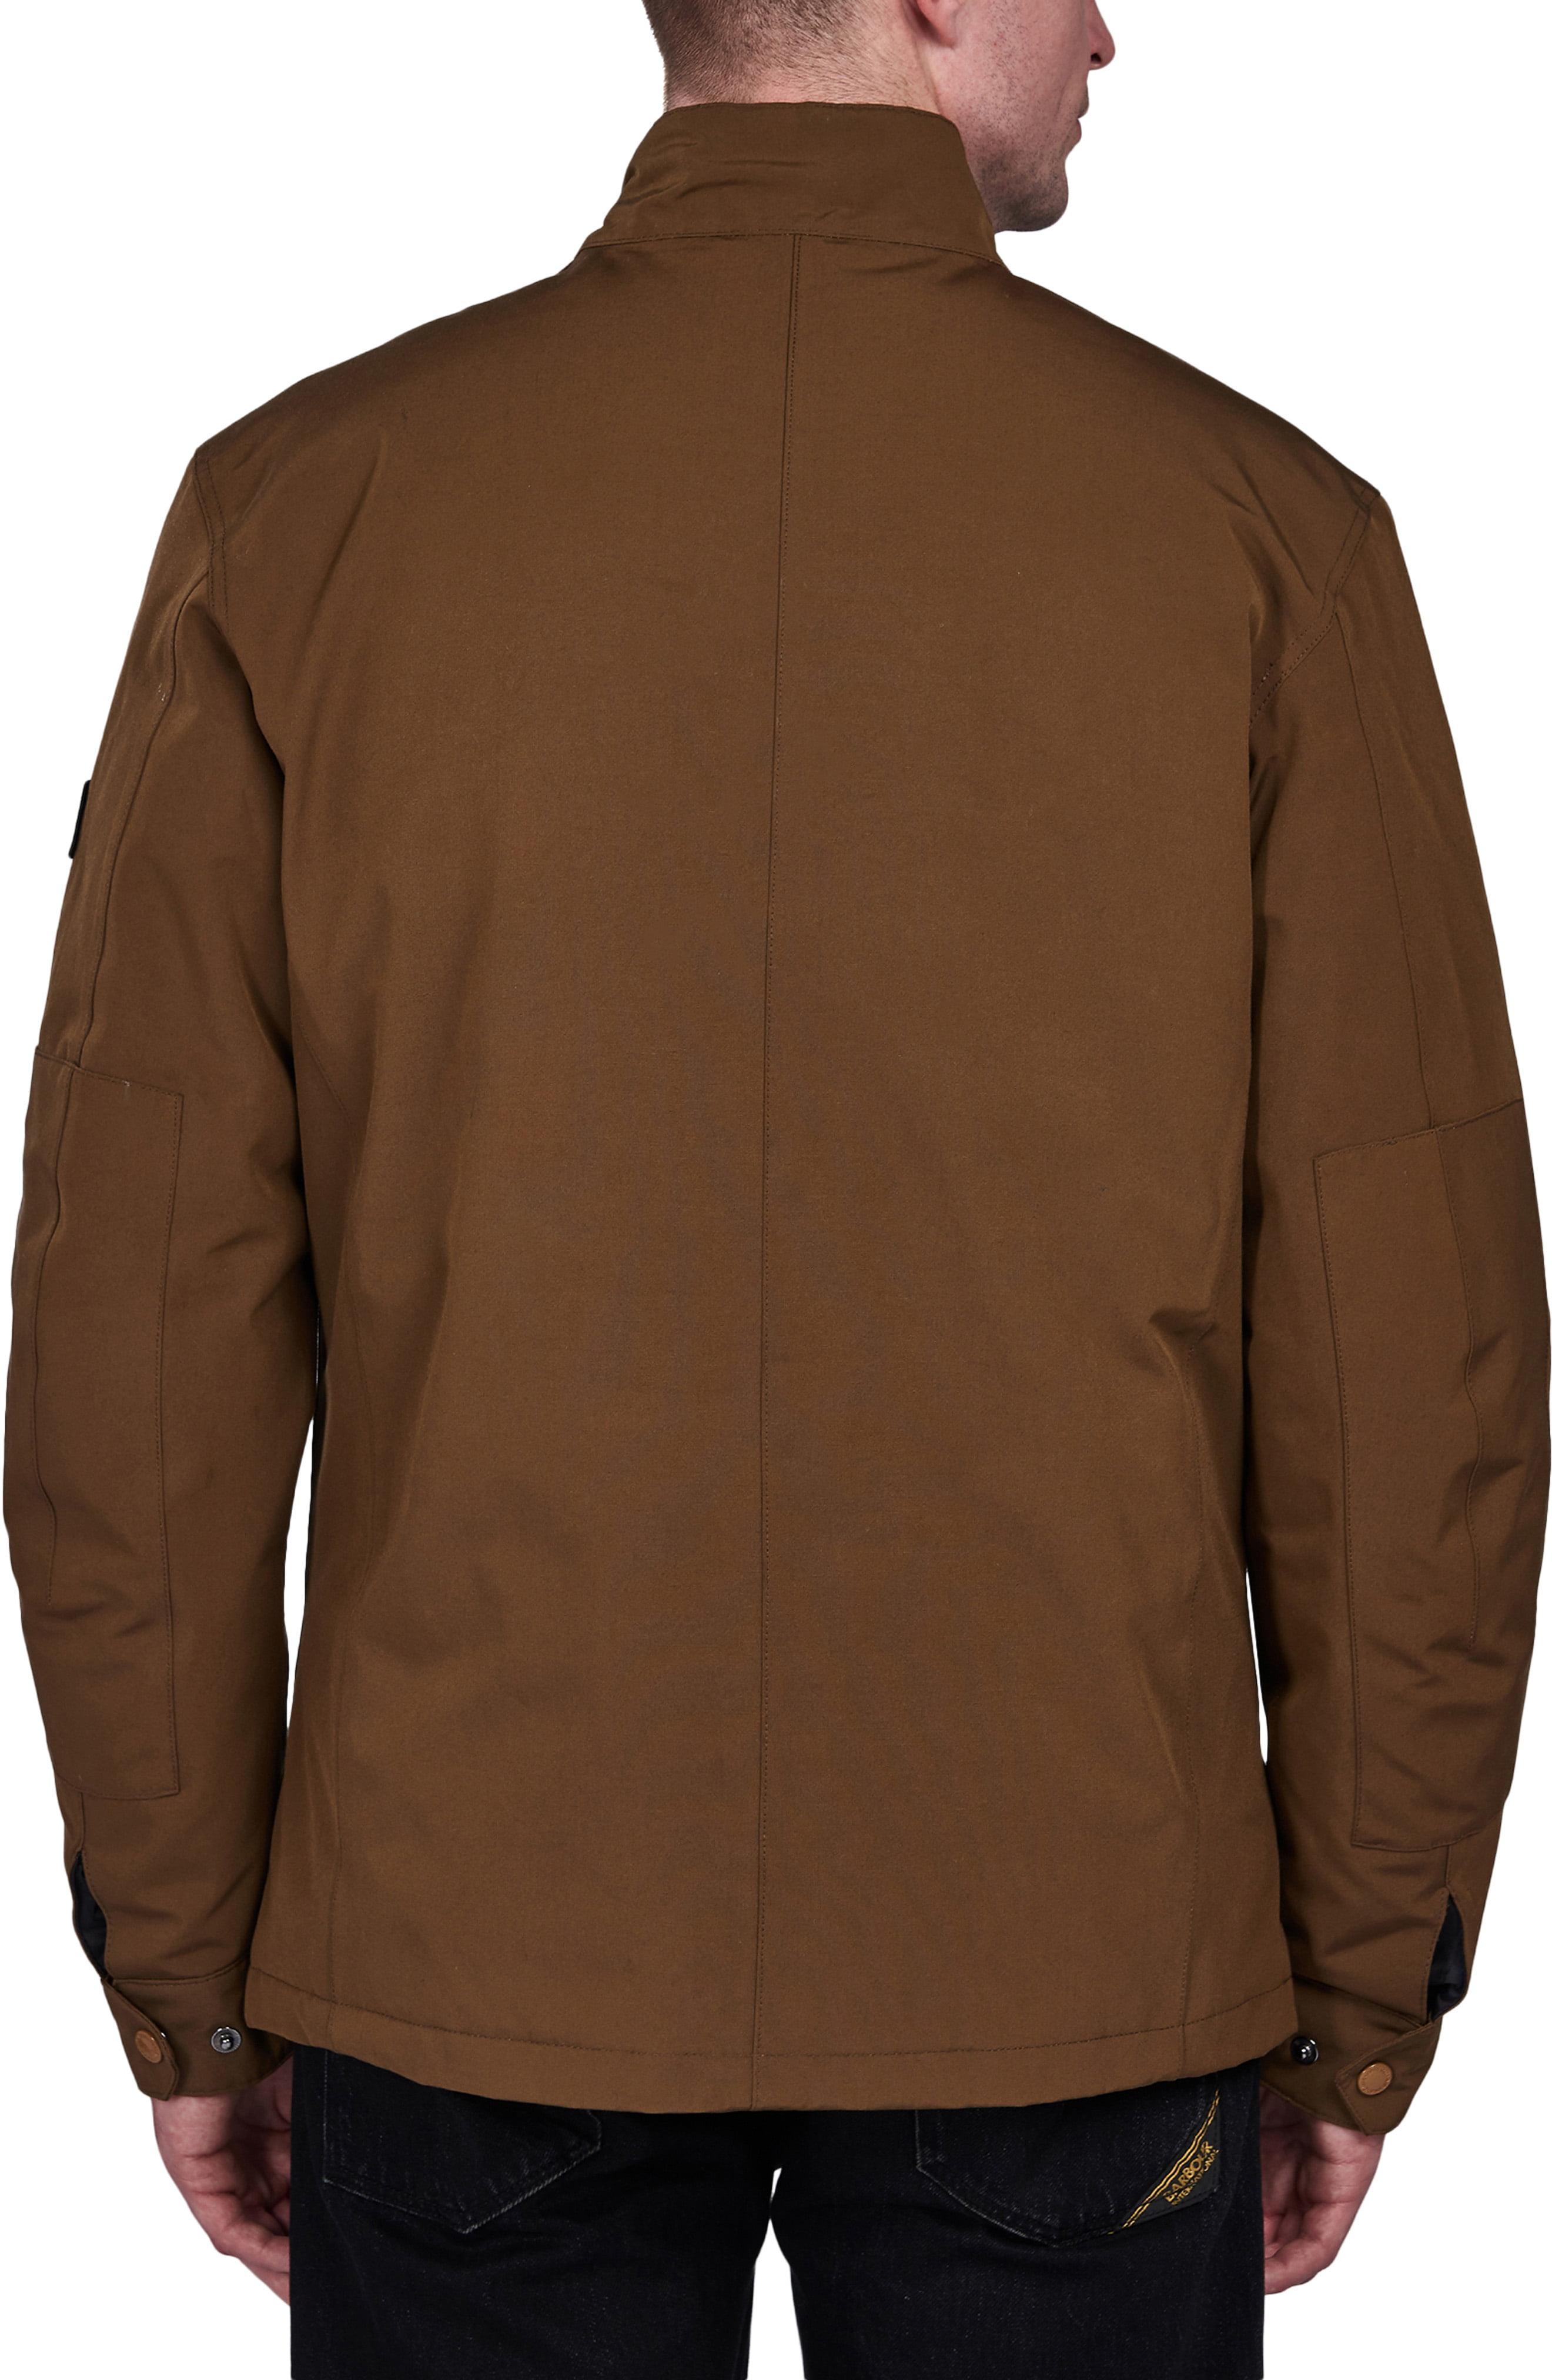 Barbour Cotton Duke Waterproof Jacket in Sand (Brown) for Men - Lyst